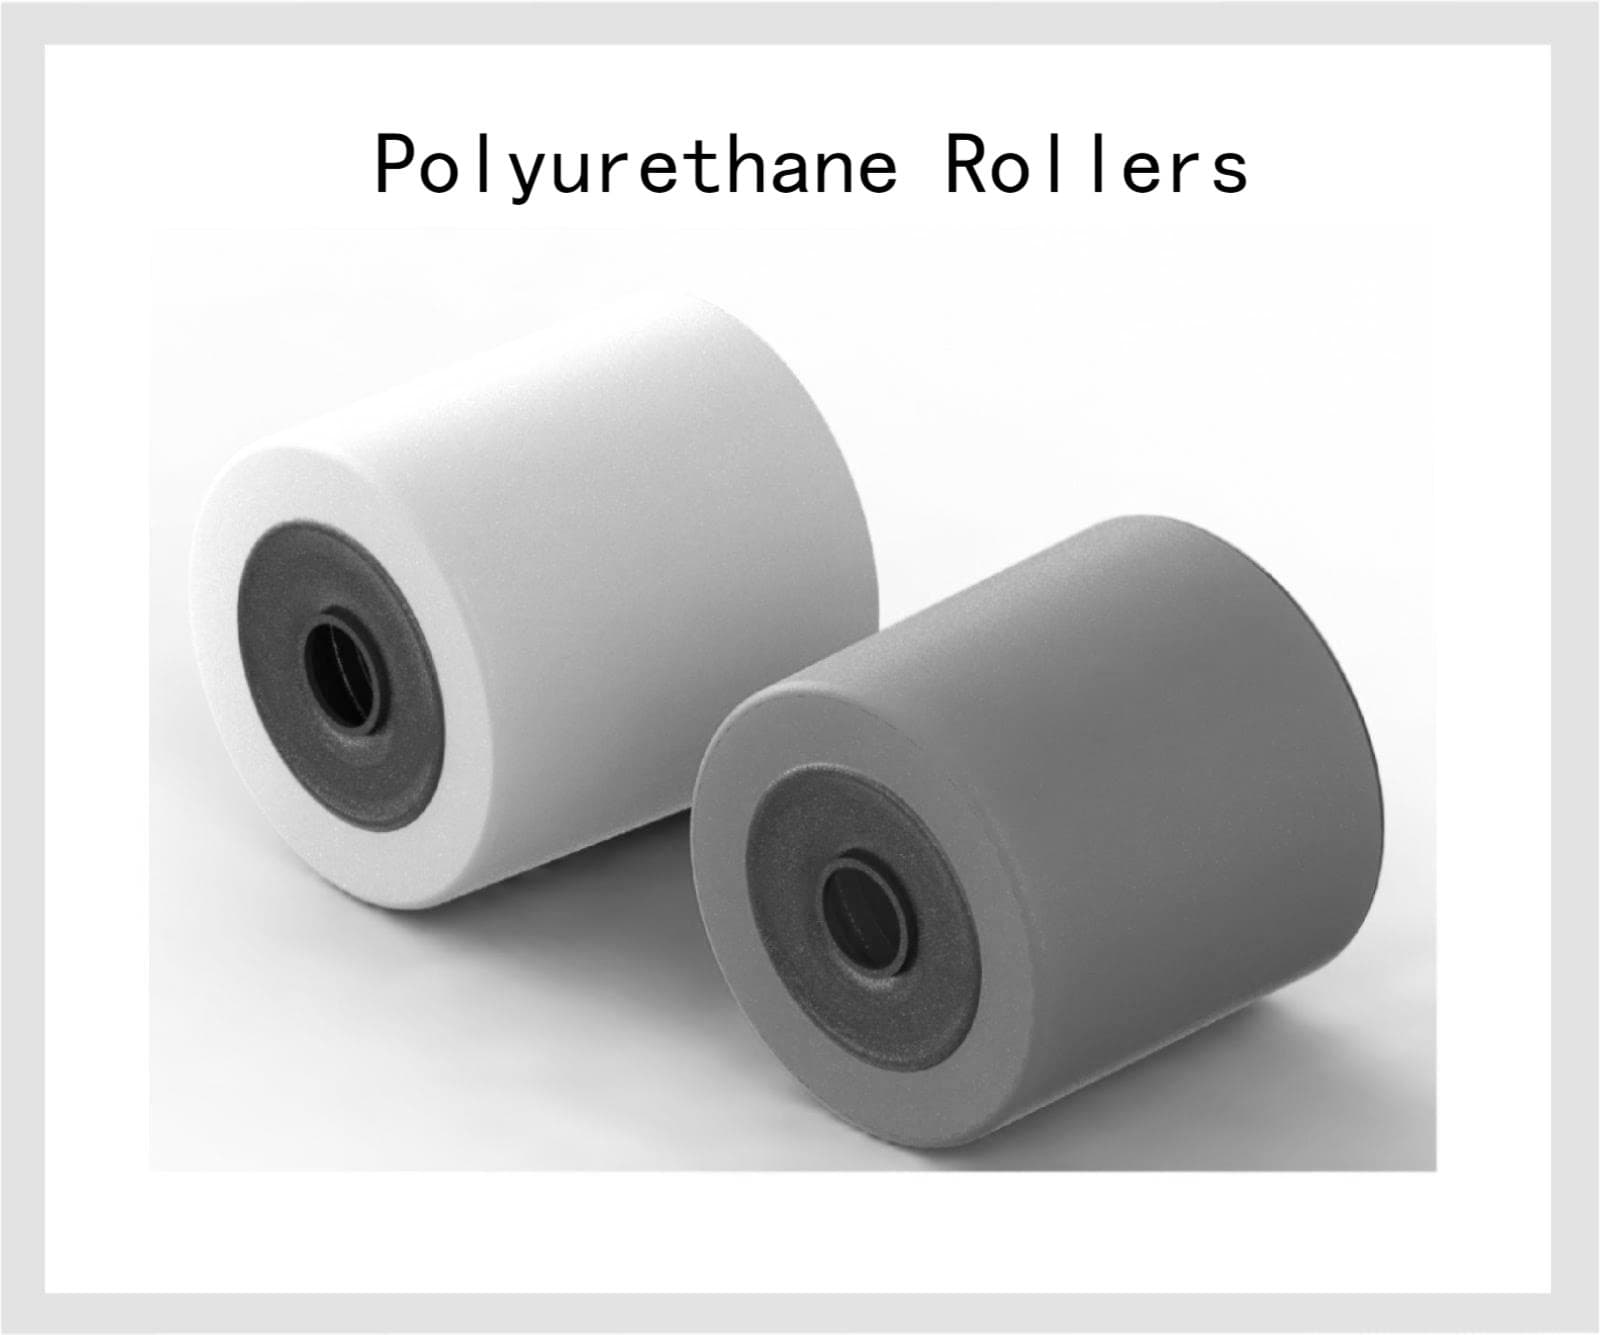 Polyurethane Rollers